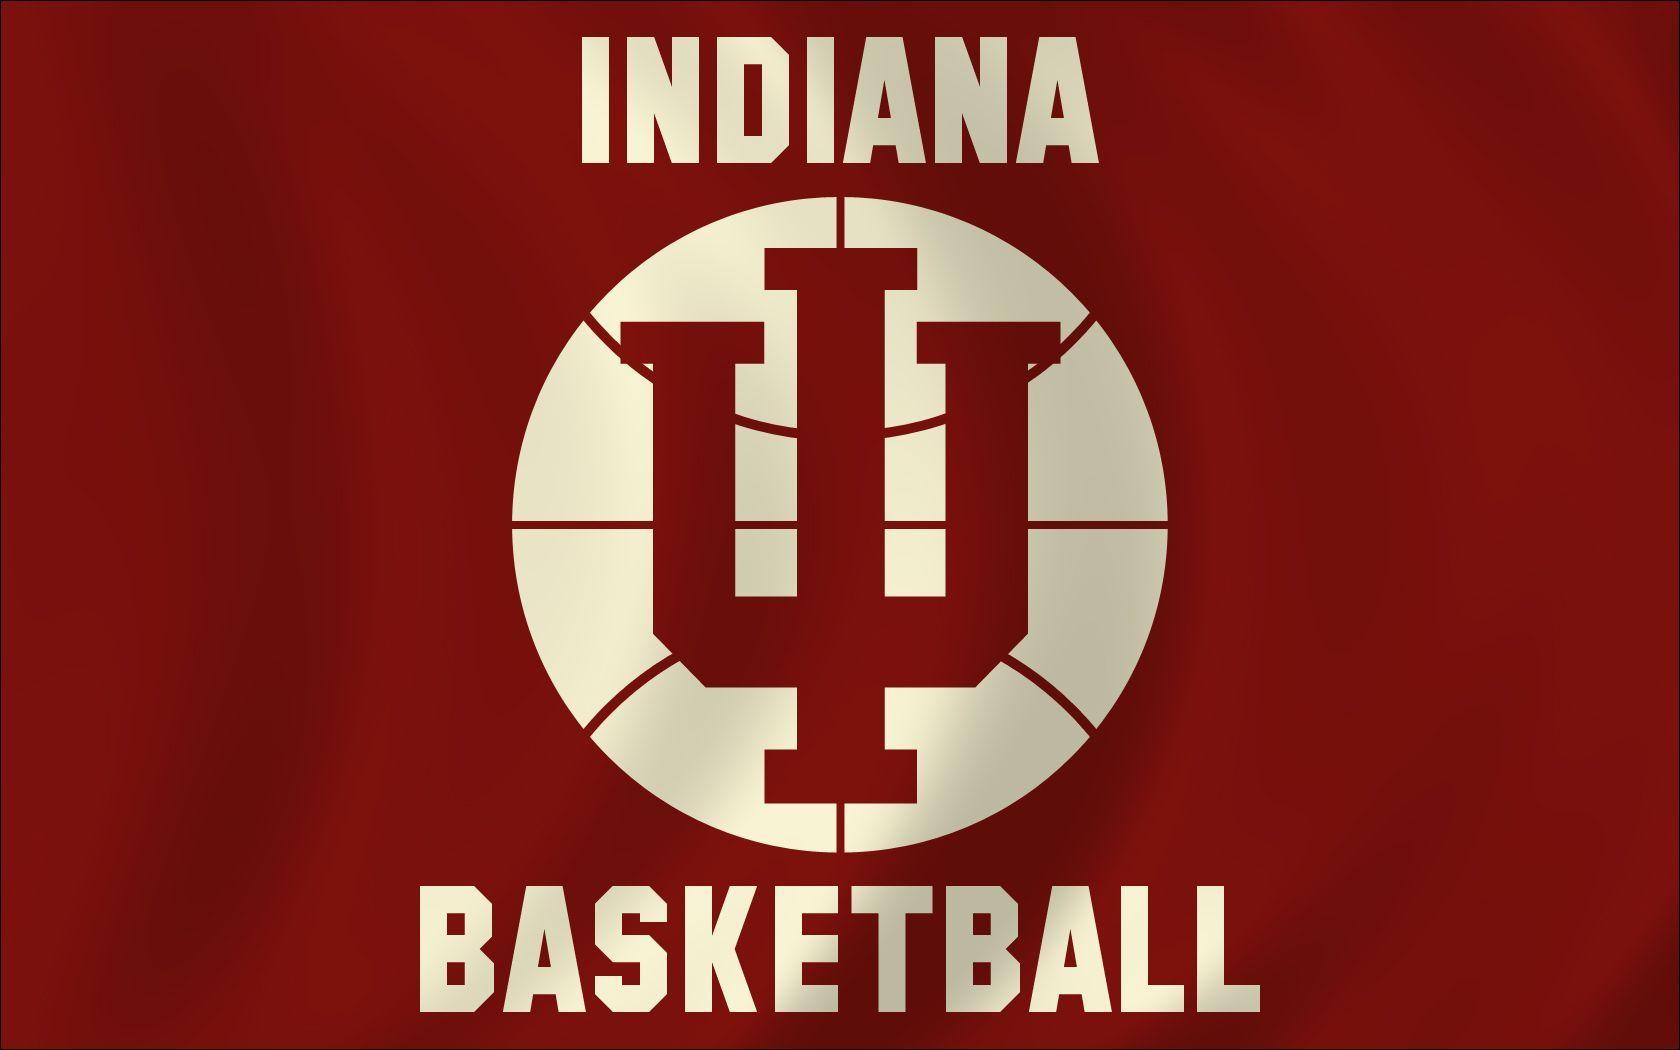 U of a Basketball Logo - Indiana Logo NCAA Basketball wallpaper 2018 in Basketball